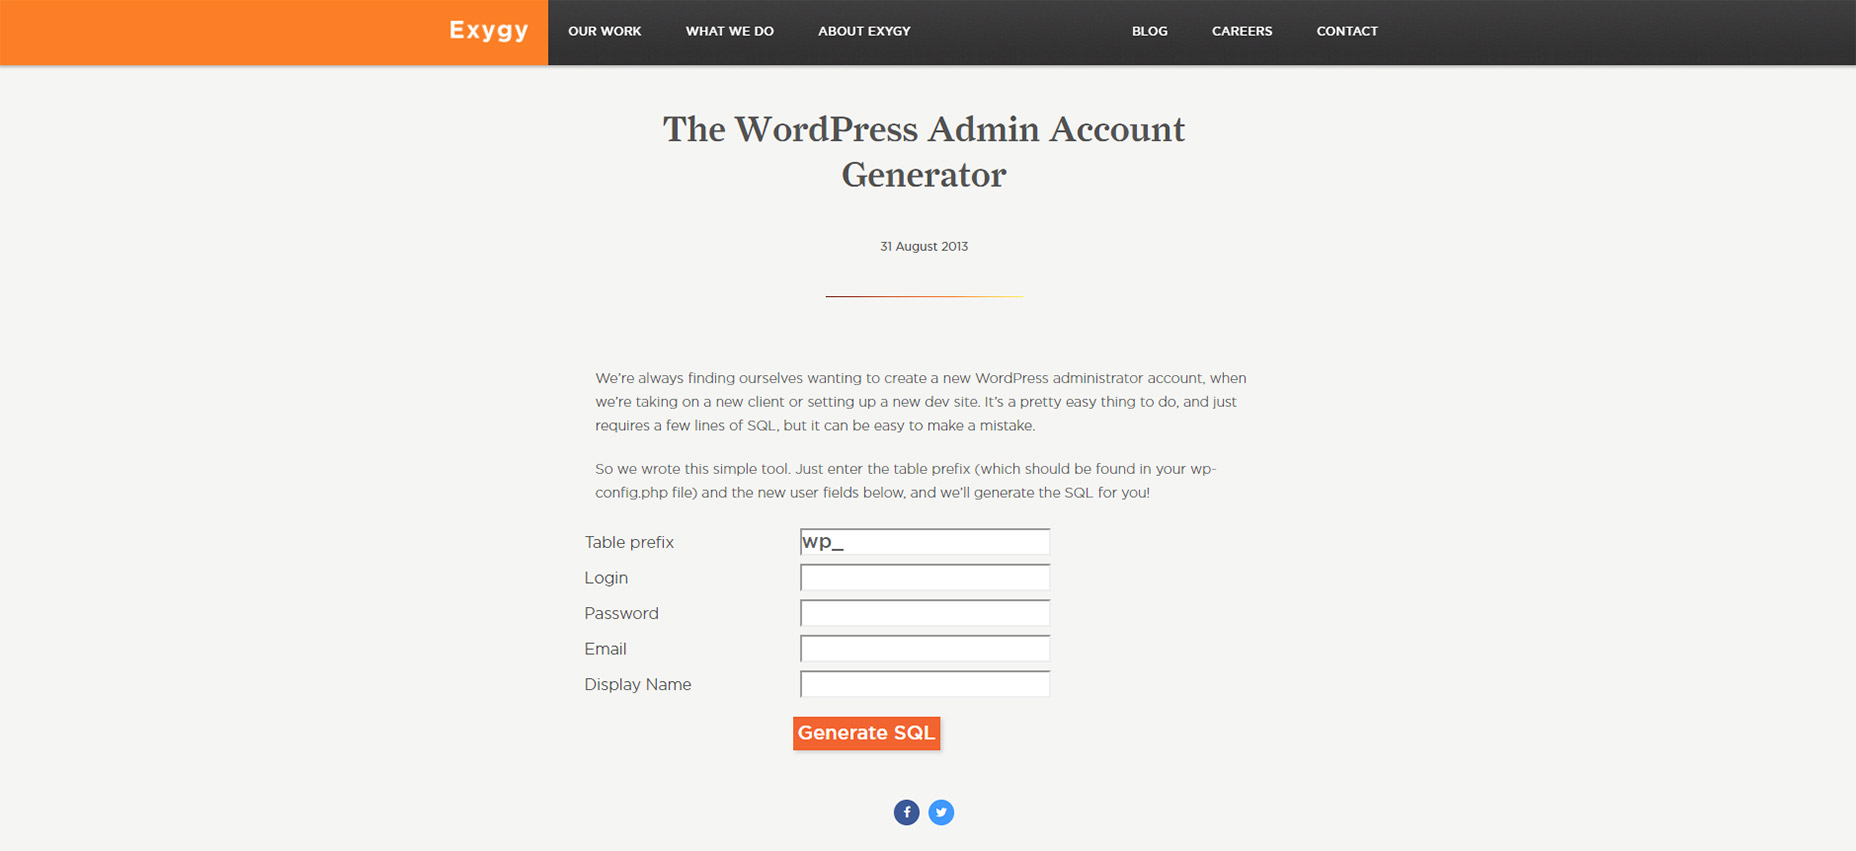 Admin Account Generator